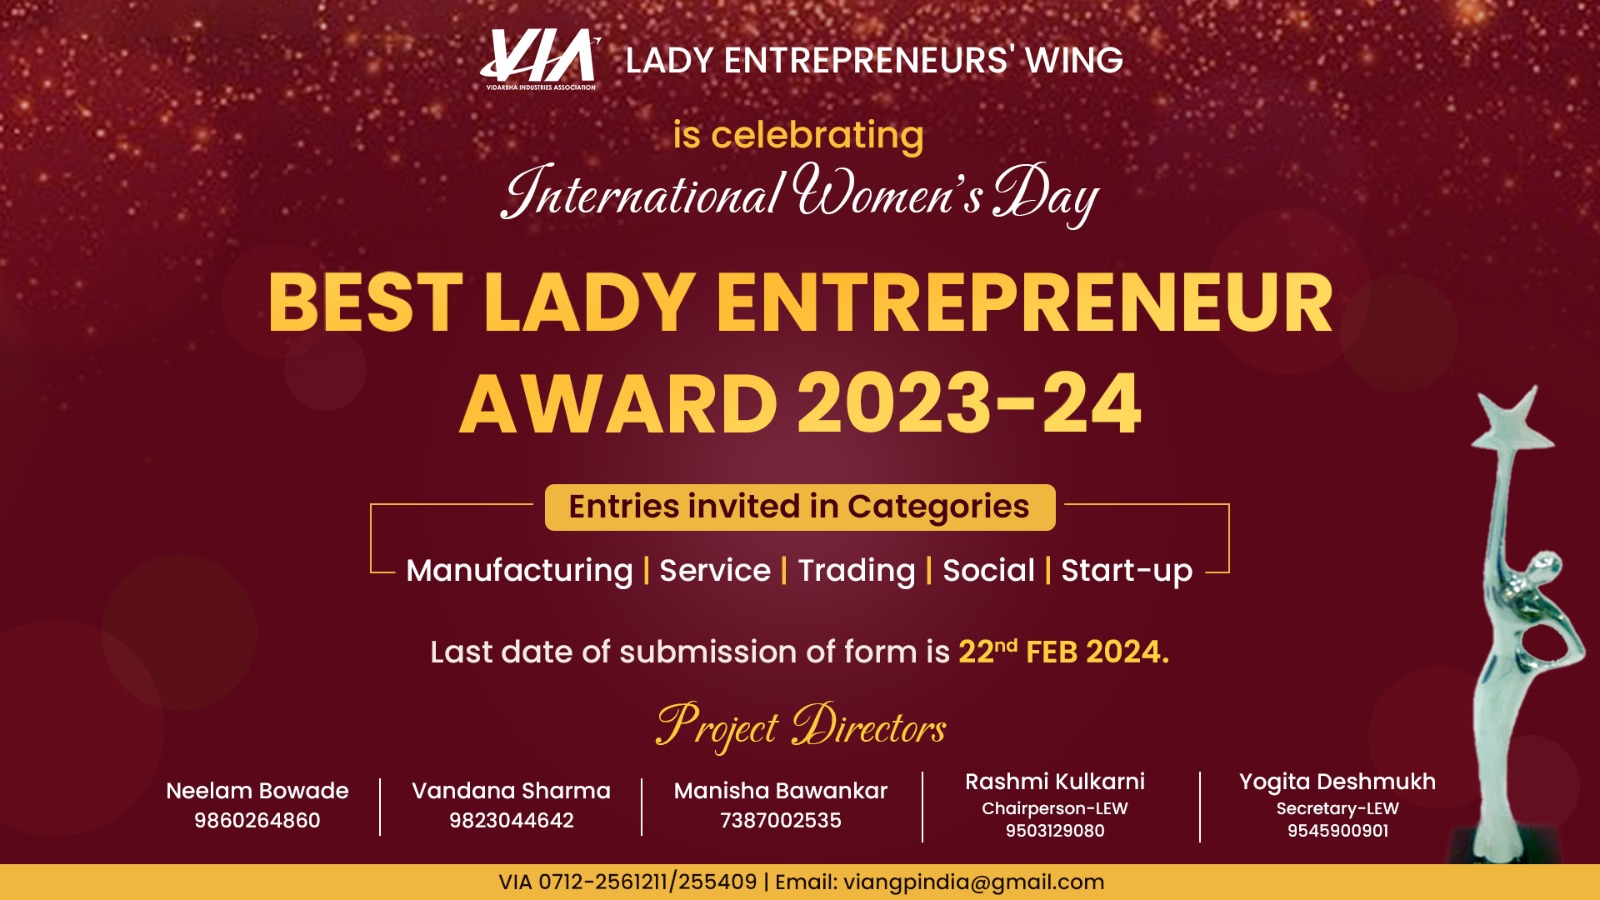 Best Lady Entrepreneur Award 2023-24: Celebrating Women's Excellence, Nagpur, Maharashtra, India